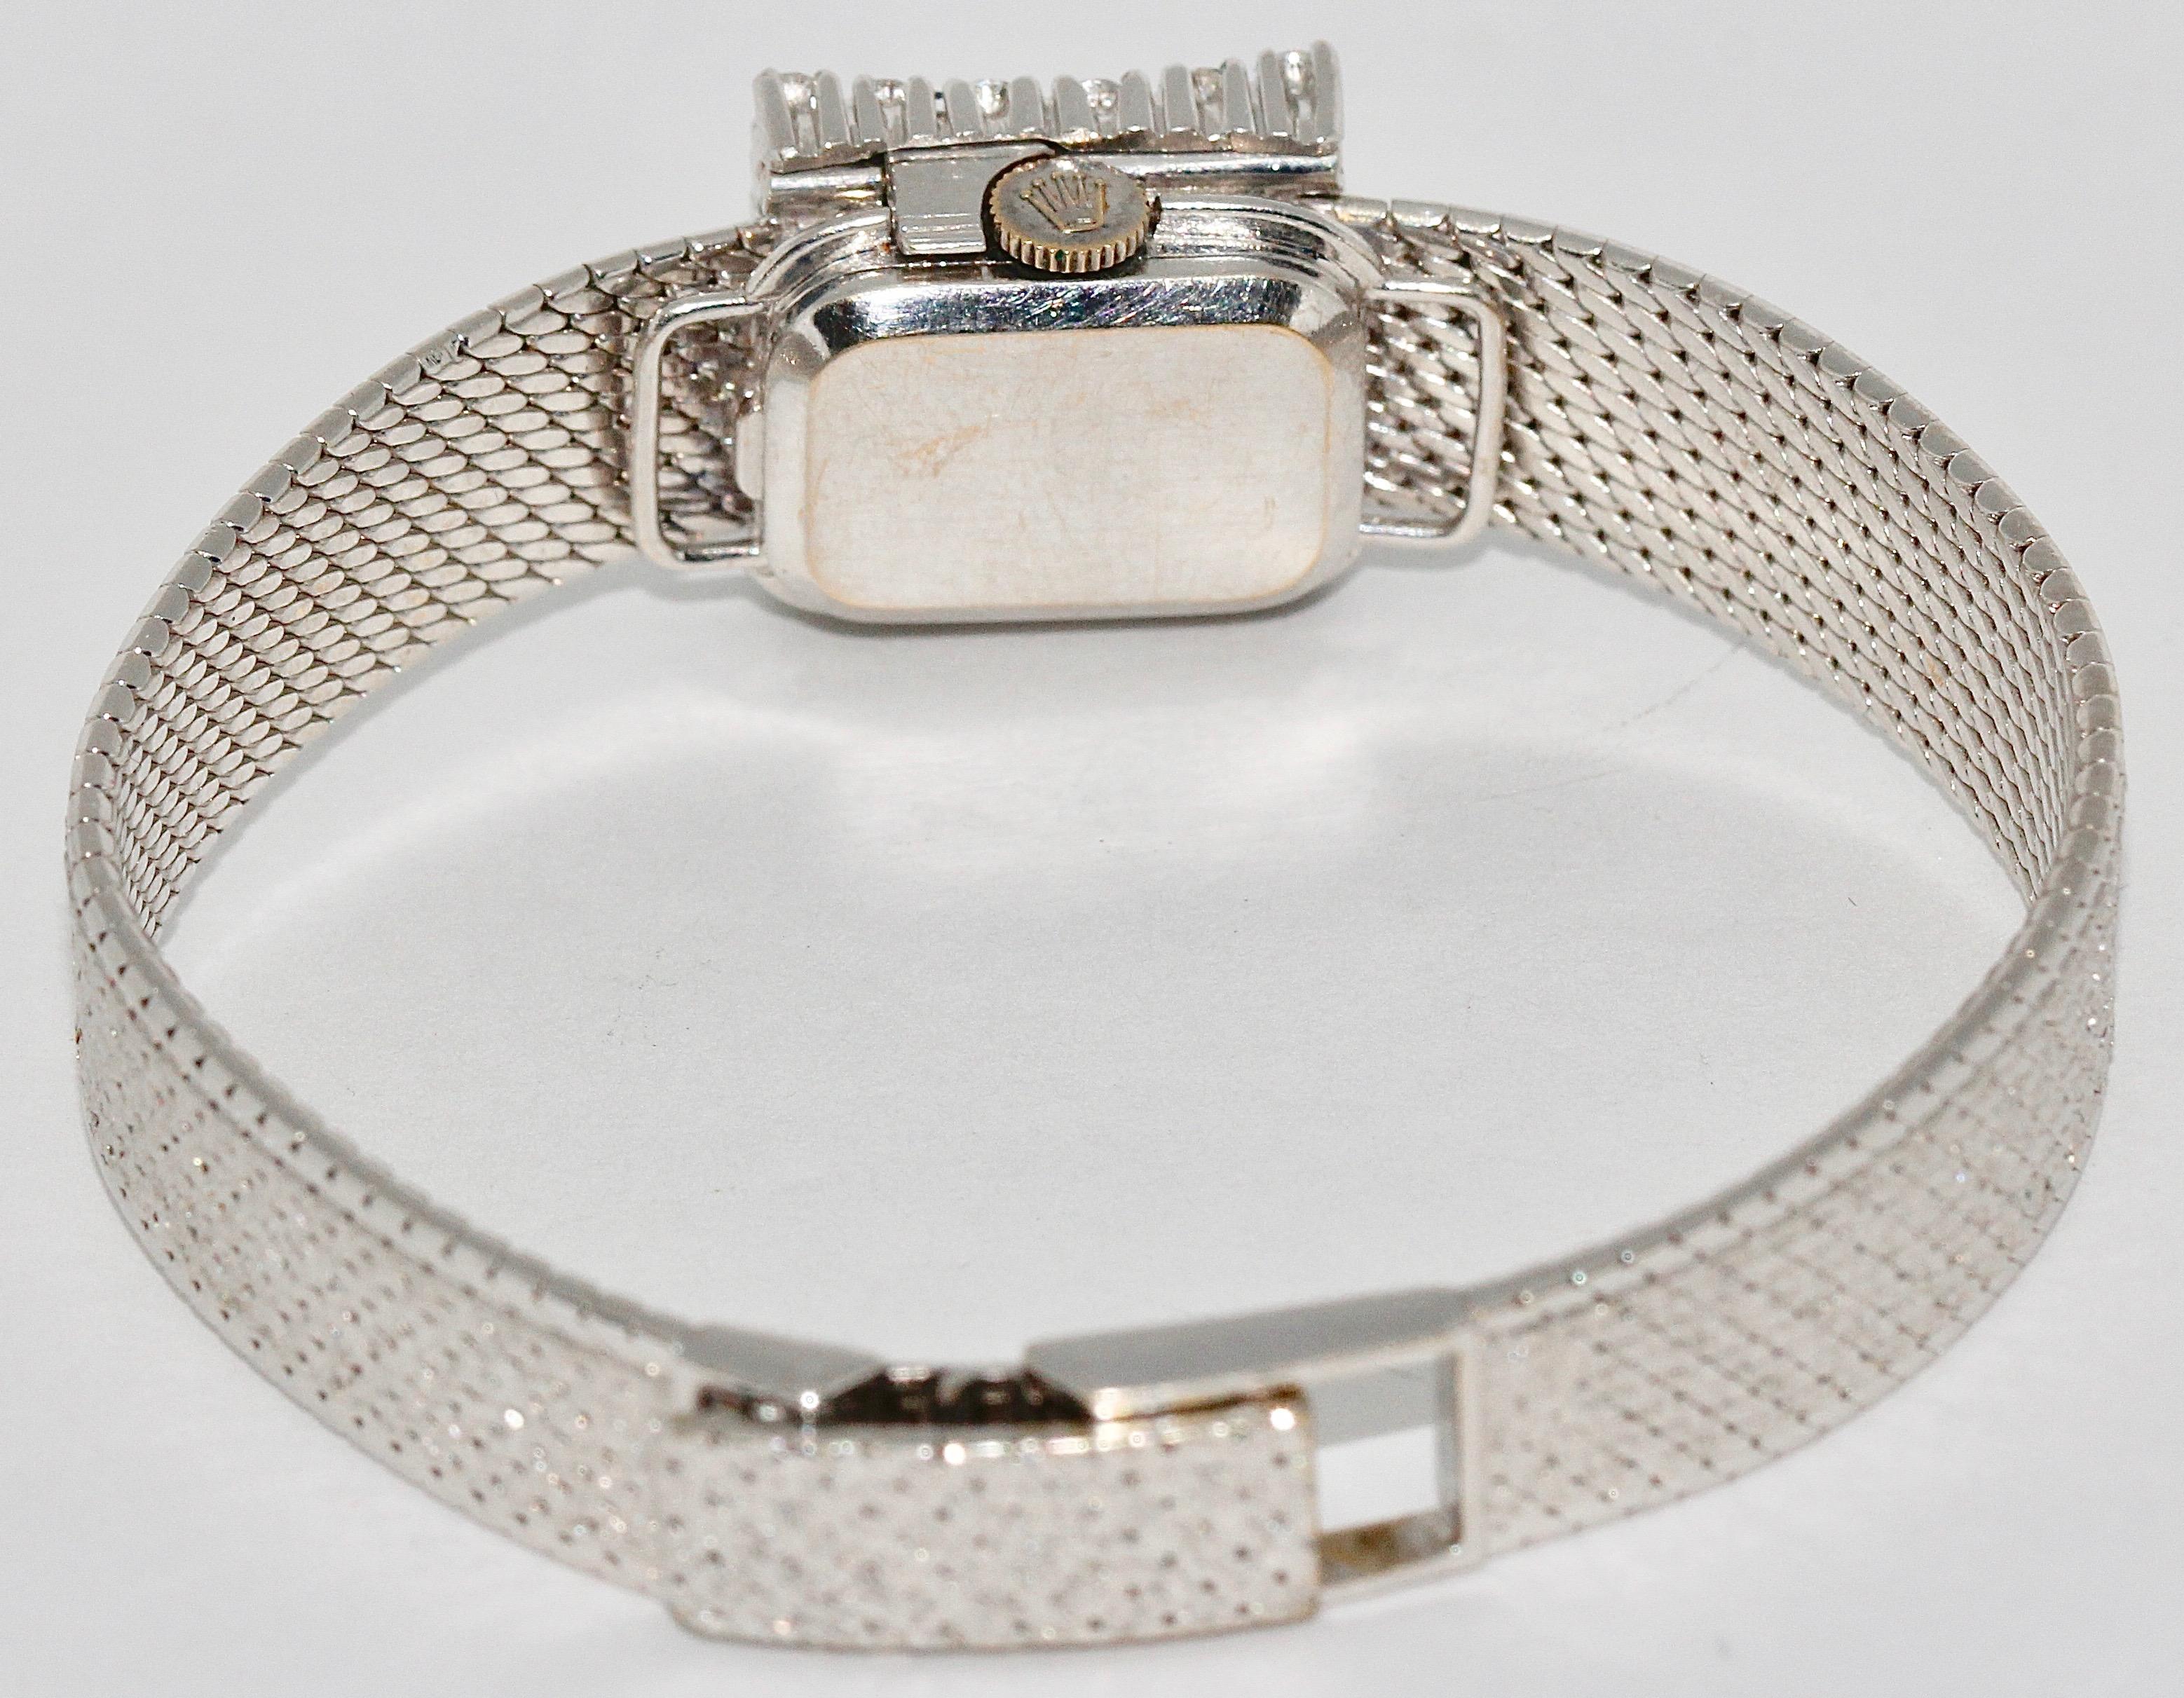 Women's Rolex Precision Ladies Wristwatch, 18 Karat White Gold, with Diamonds